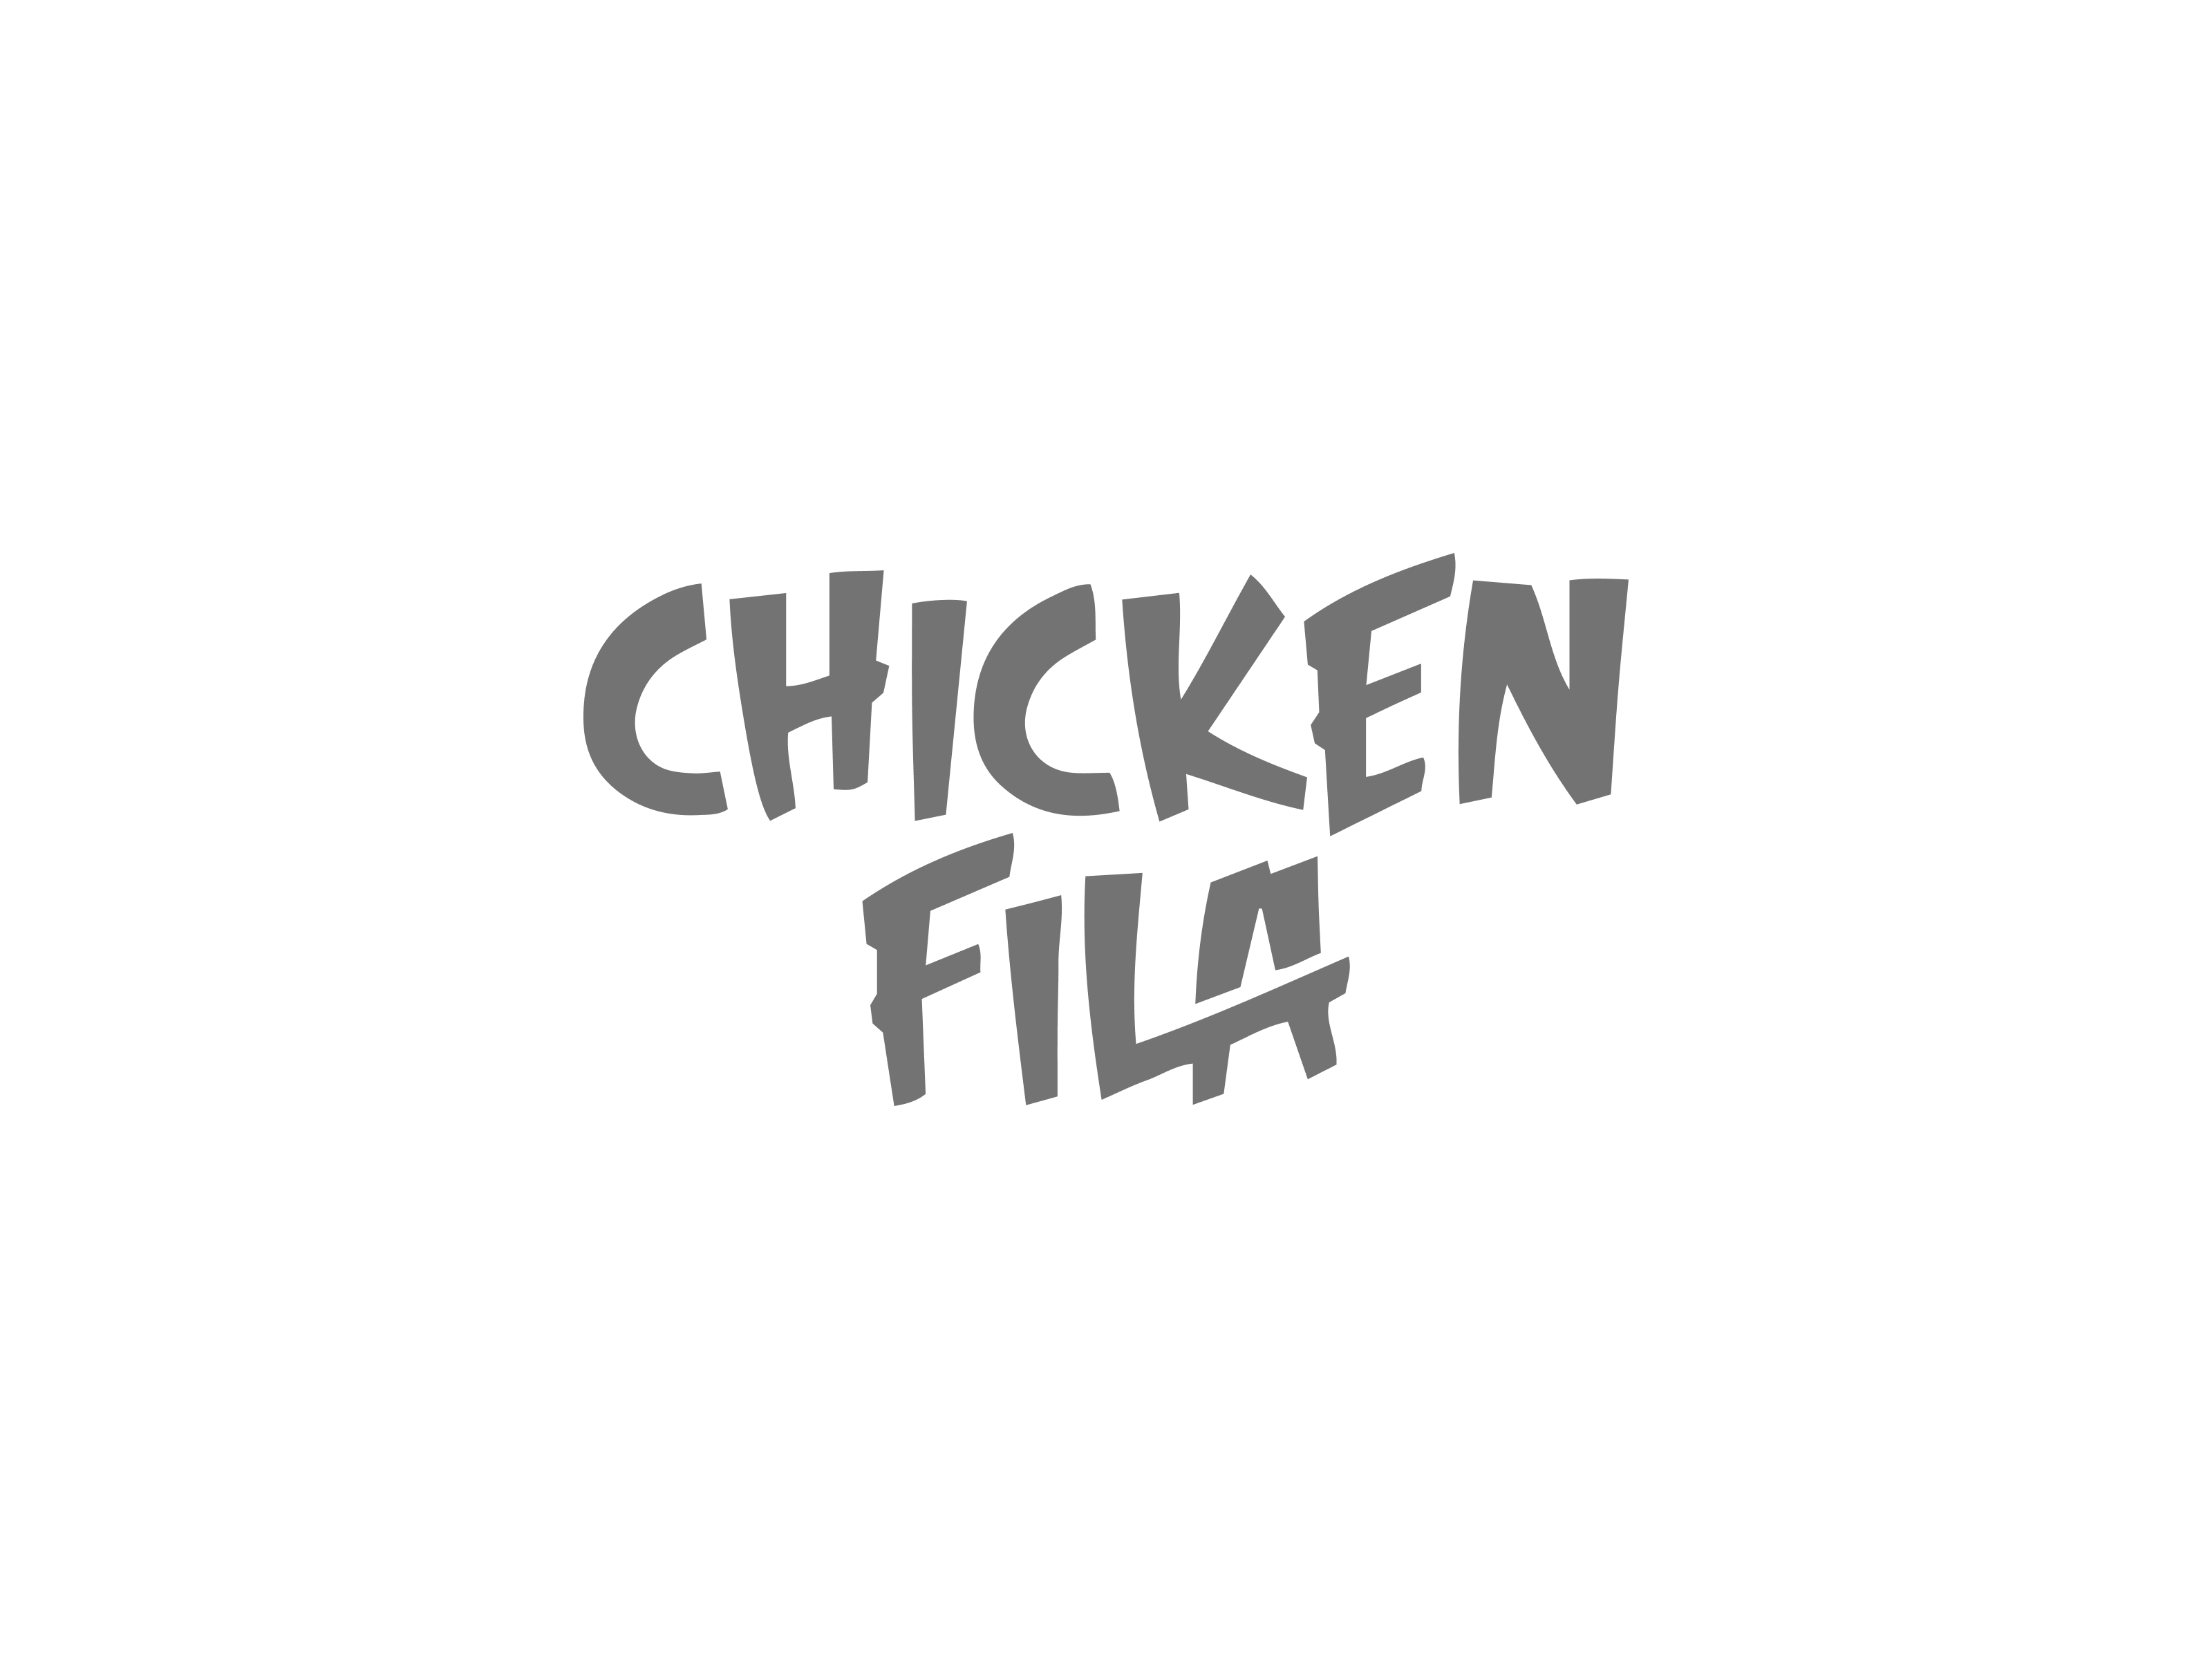 Chicken Fila by Zyda